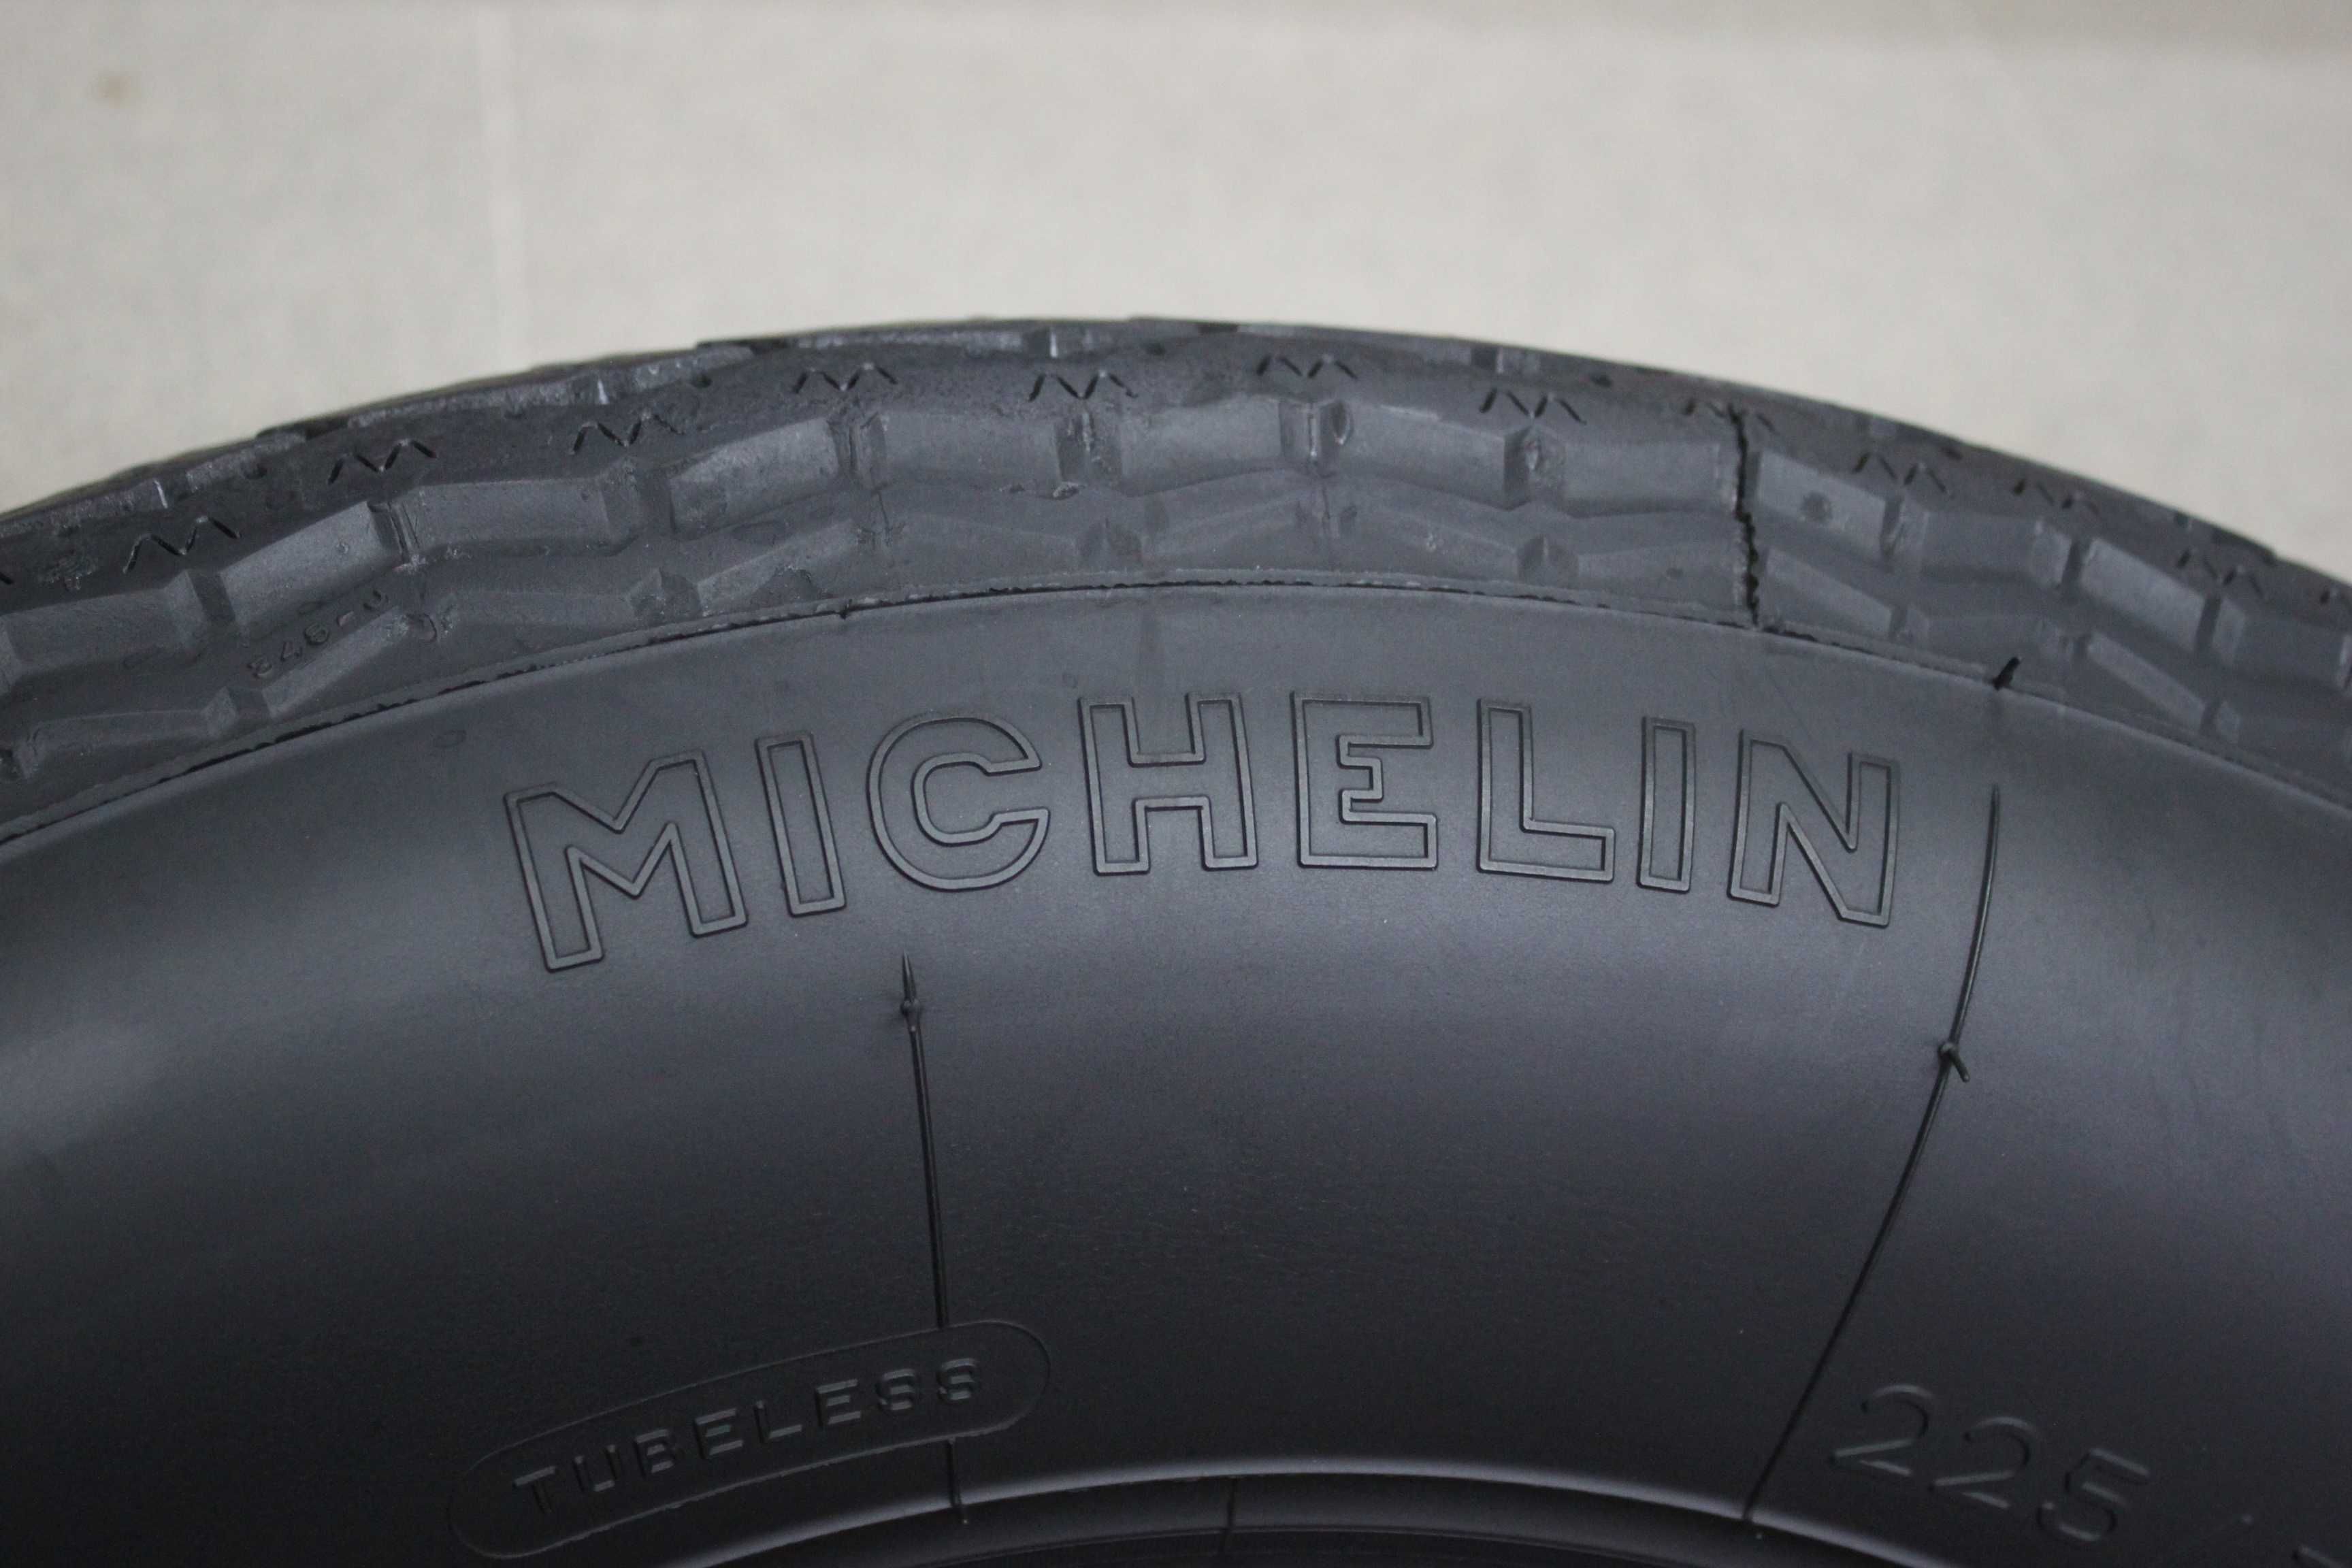 225/70 VR 15 Michelin XWX